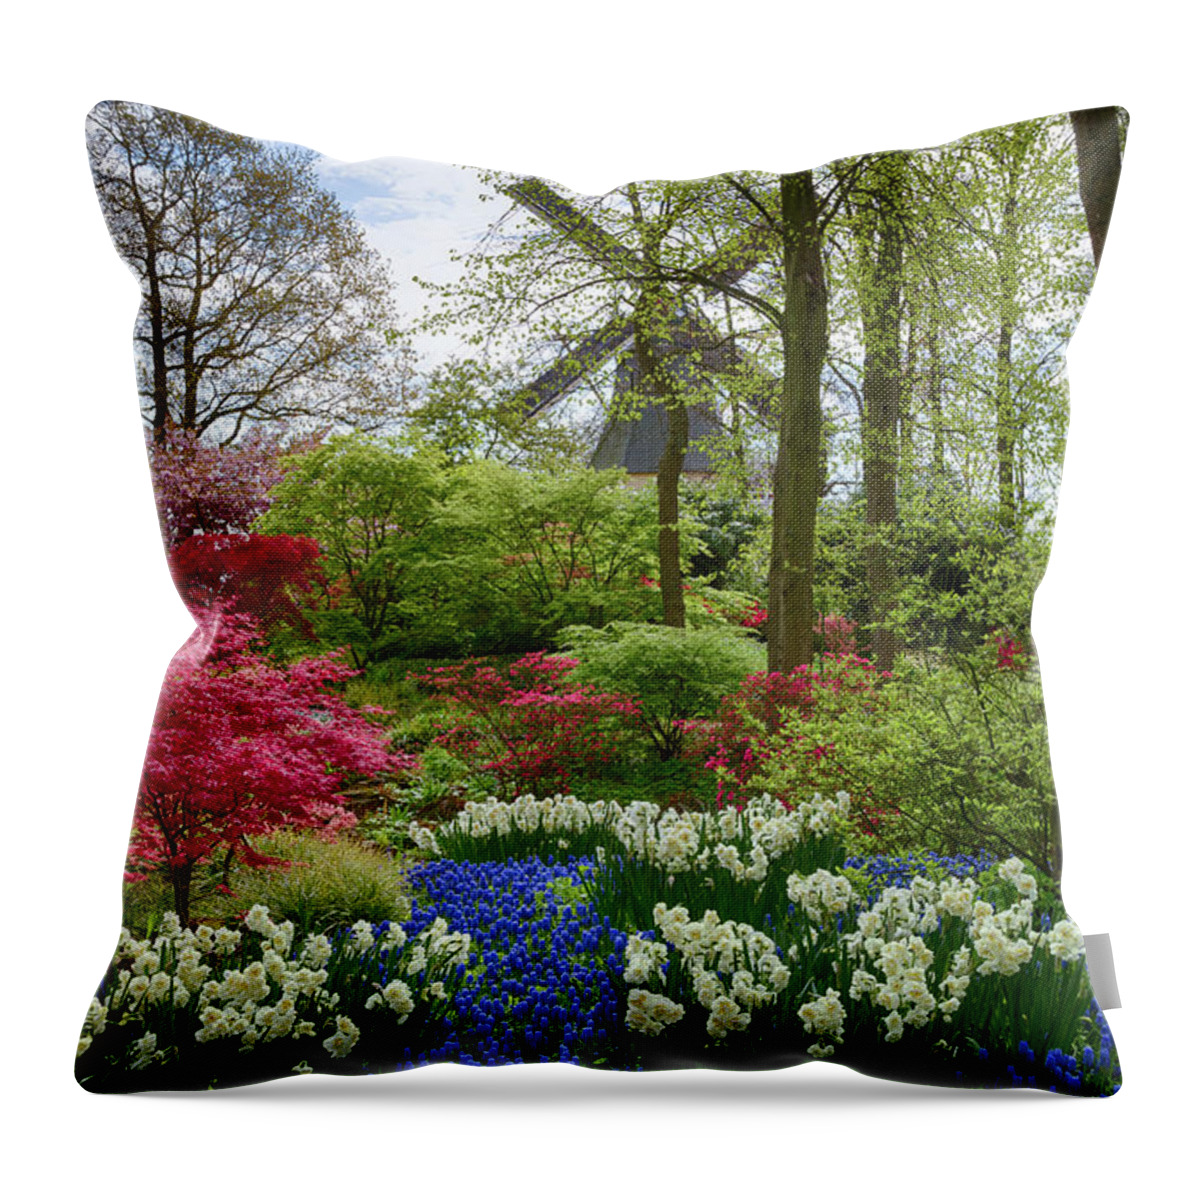 Europe Throw Pillow featuring the photograph Keukenhof Gardens Windmill by Jim Miller